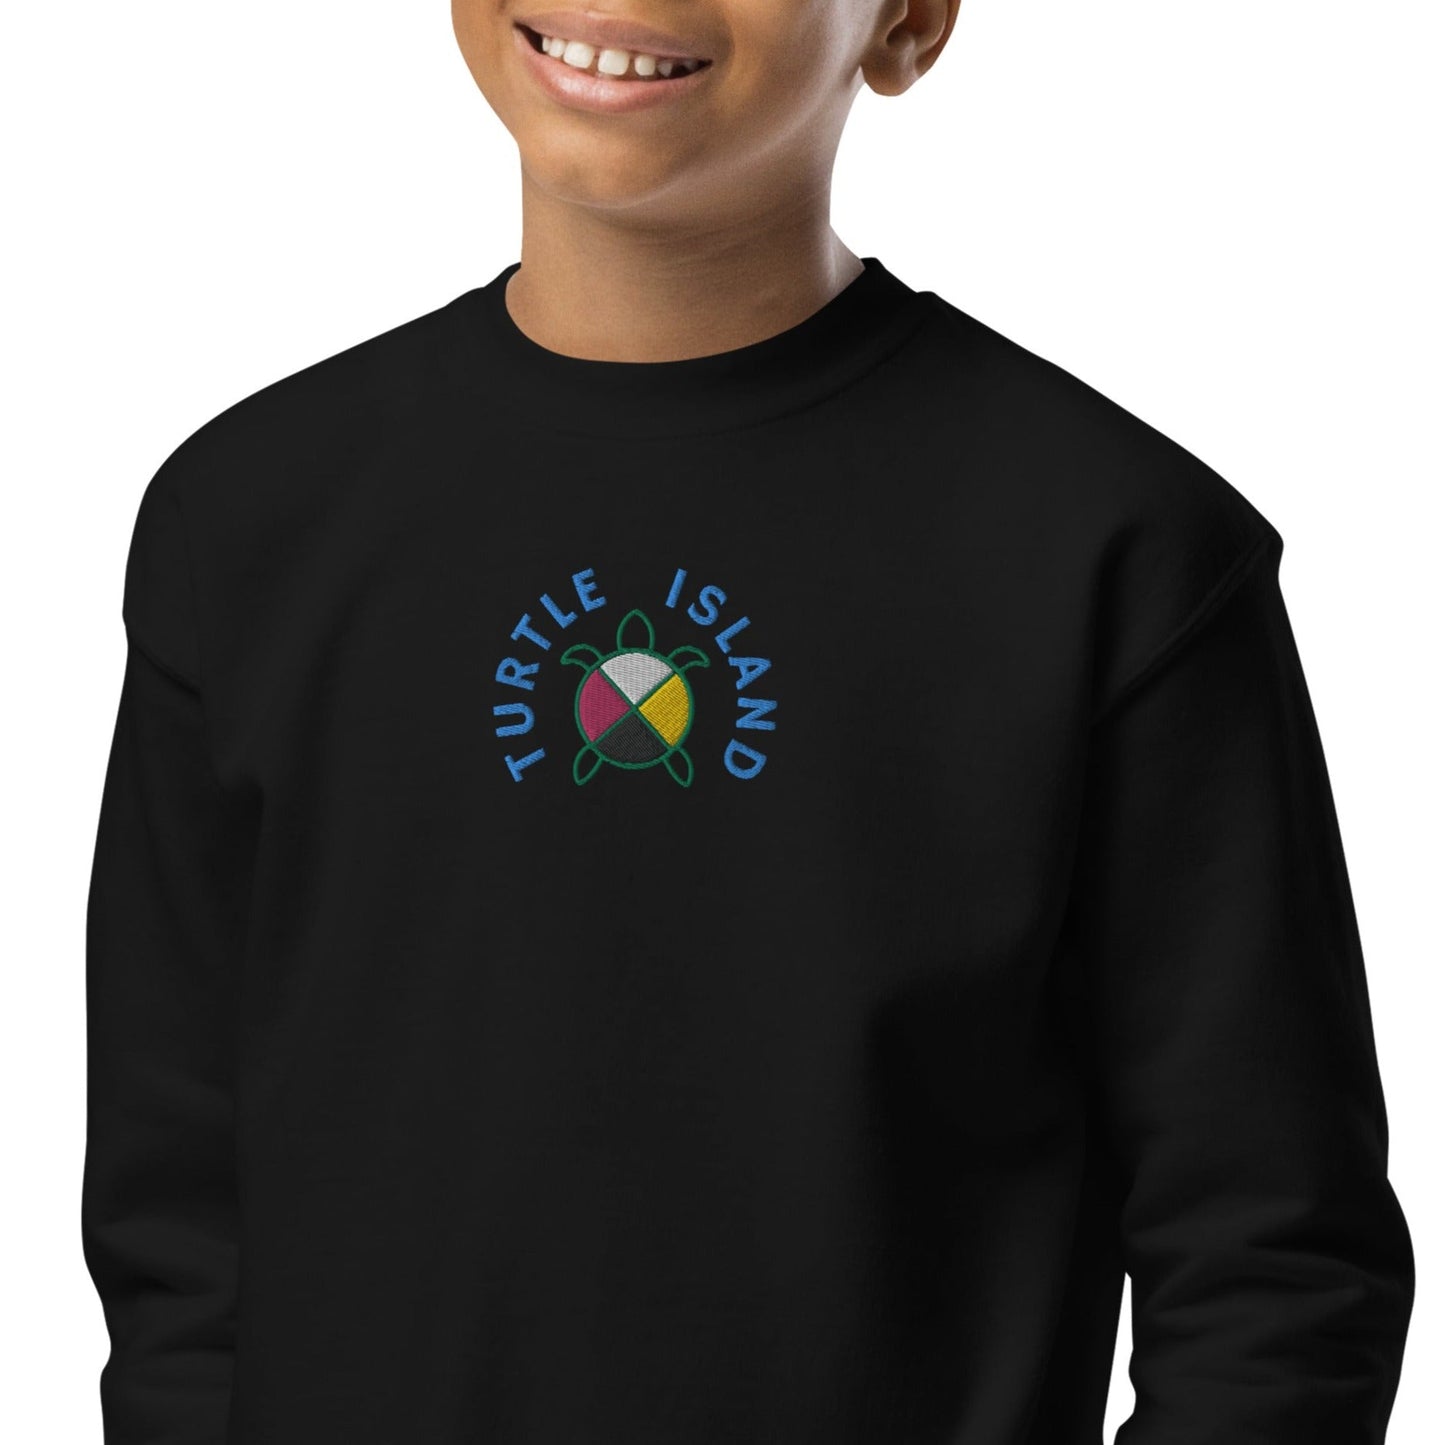 Turtle Island Embroidered Youth crewneck sweatshirt - Nikikw Designs